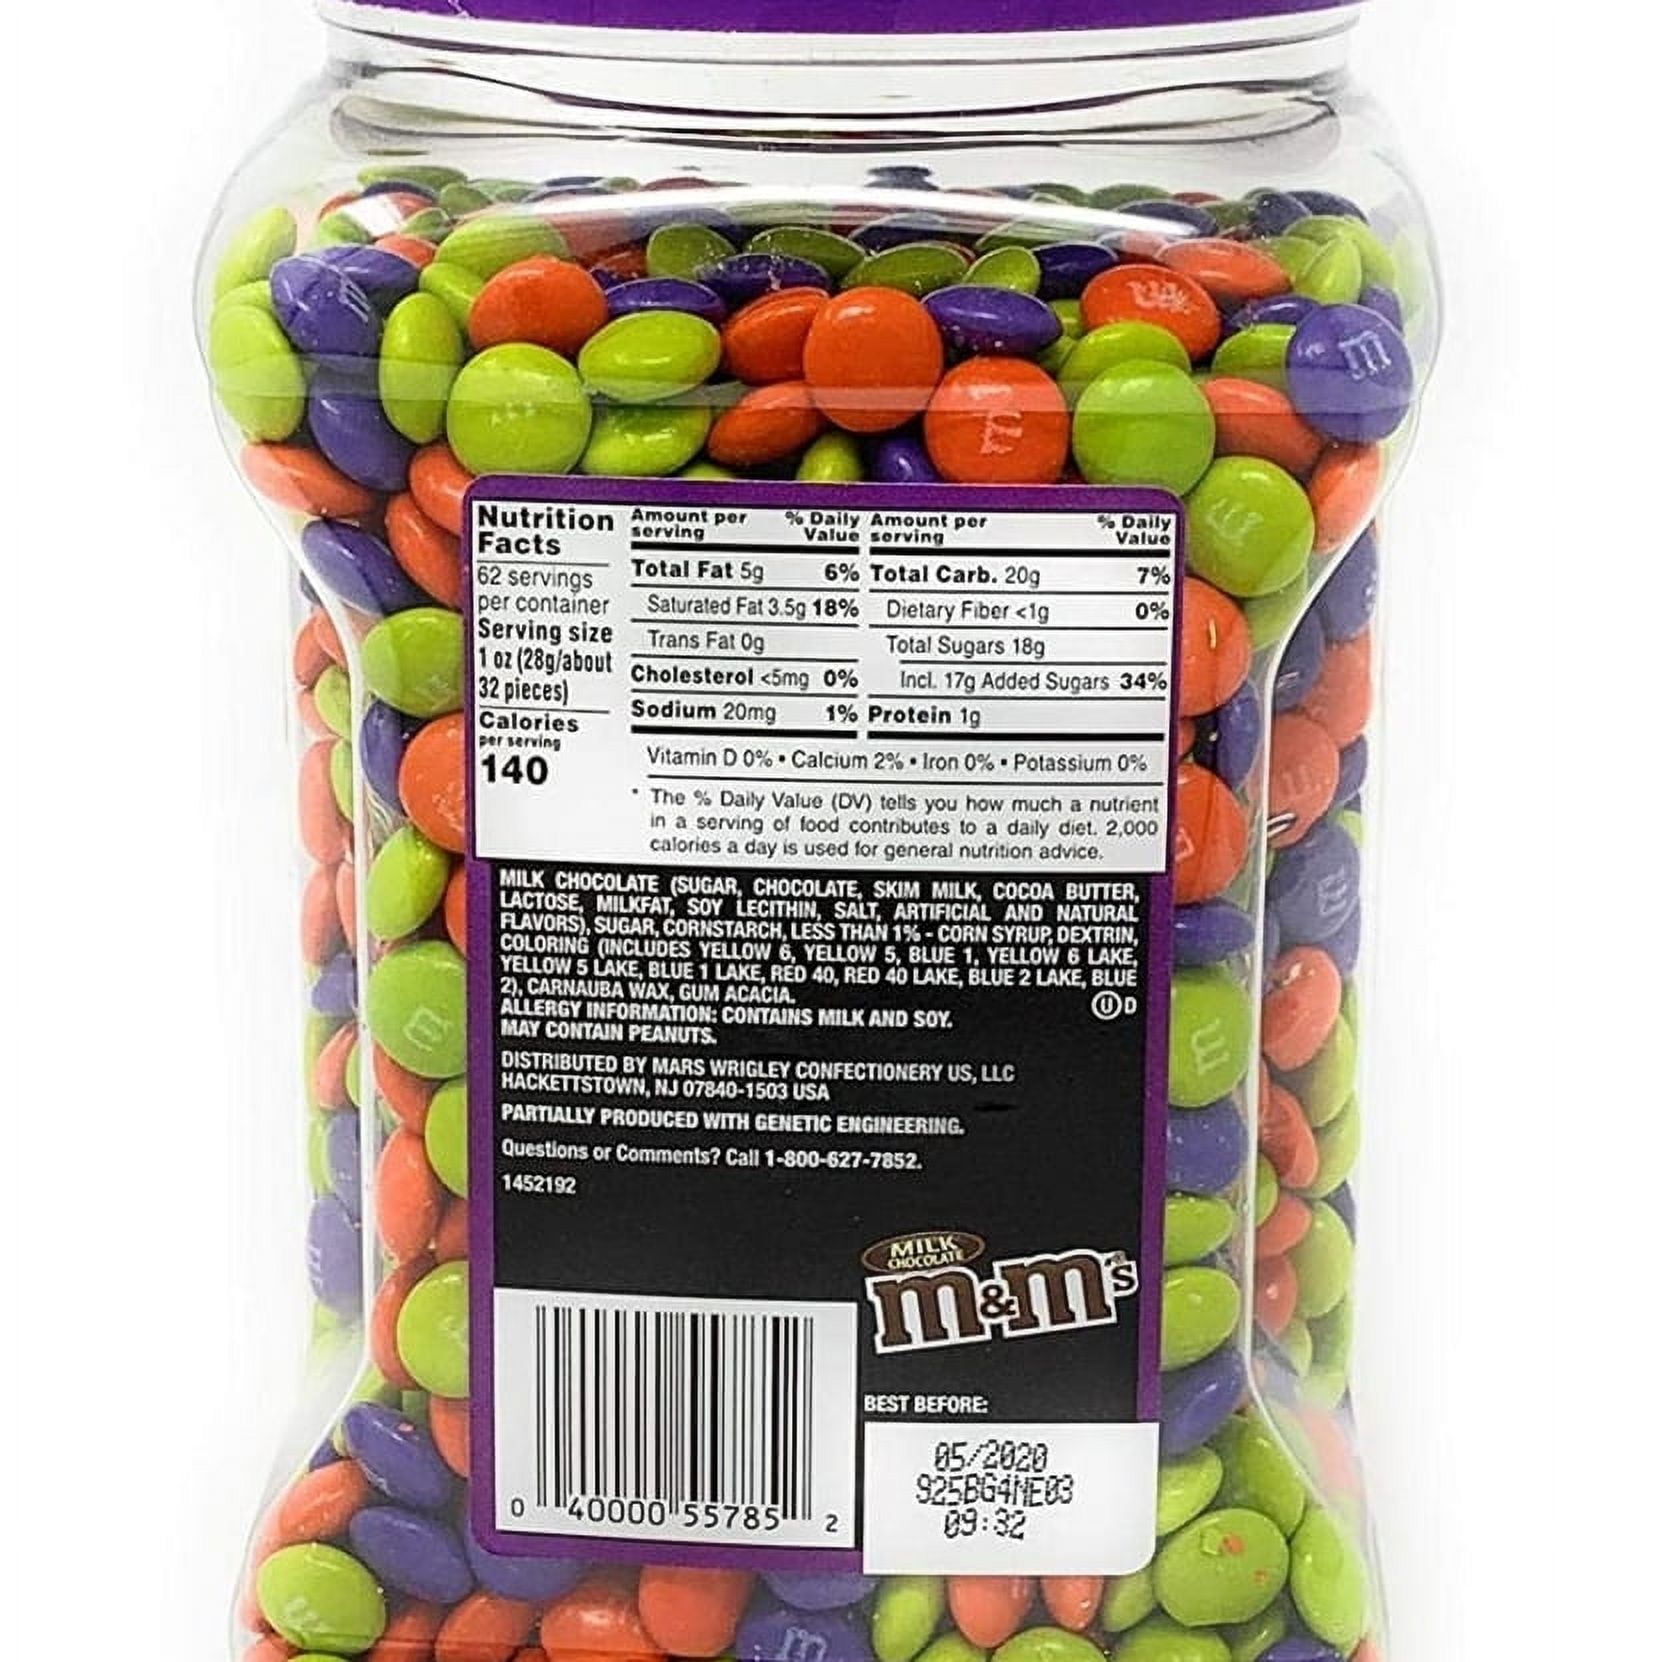 M&M'S Ghoul's Mix Bulk Peanut Chocolate Halloween Candy Jar, 62 oz